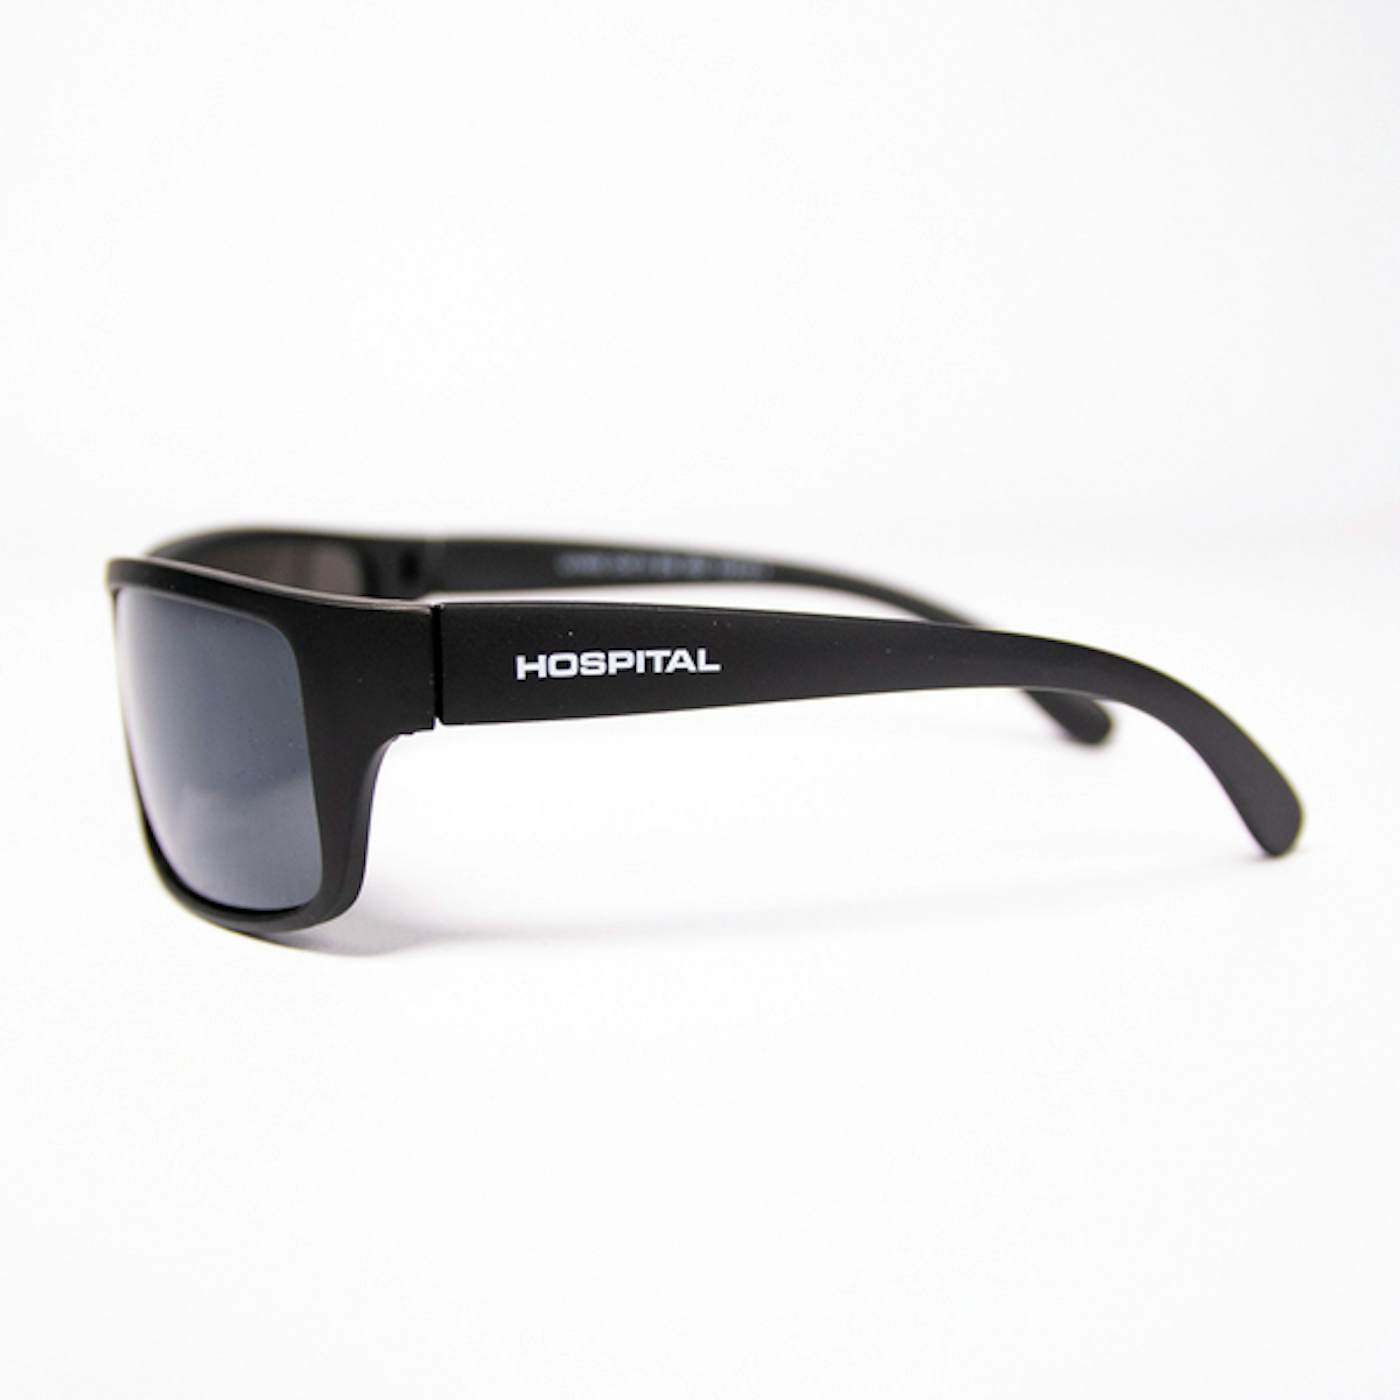 Hospital Records Sports Sunglasses